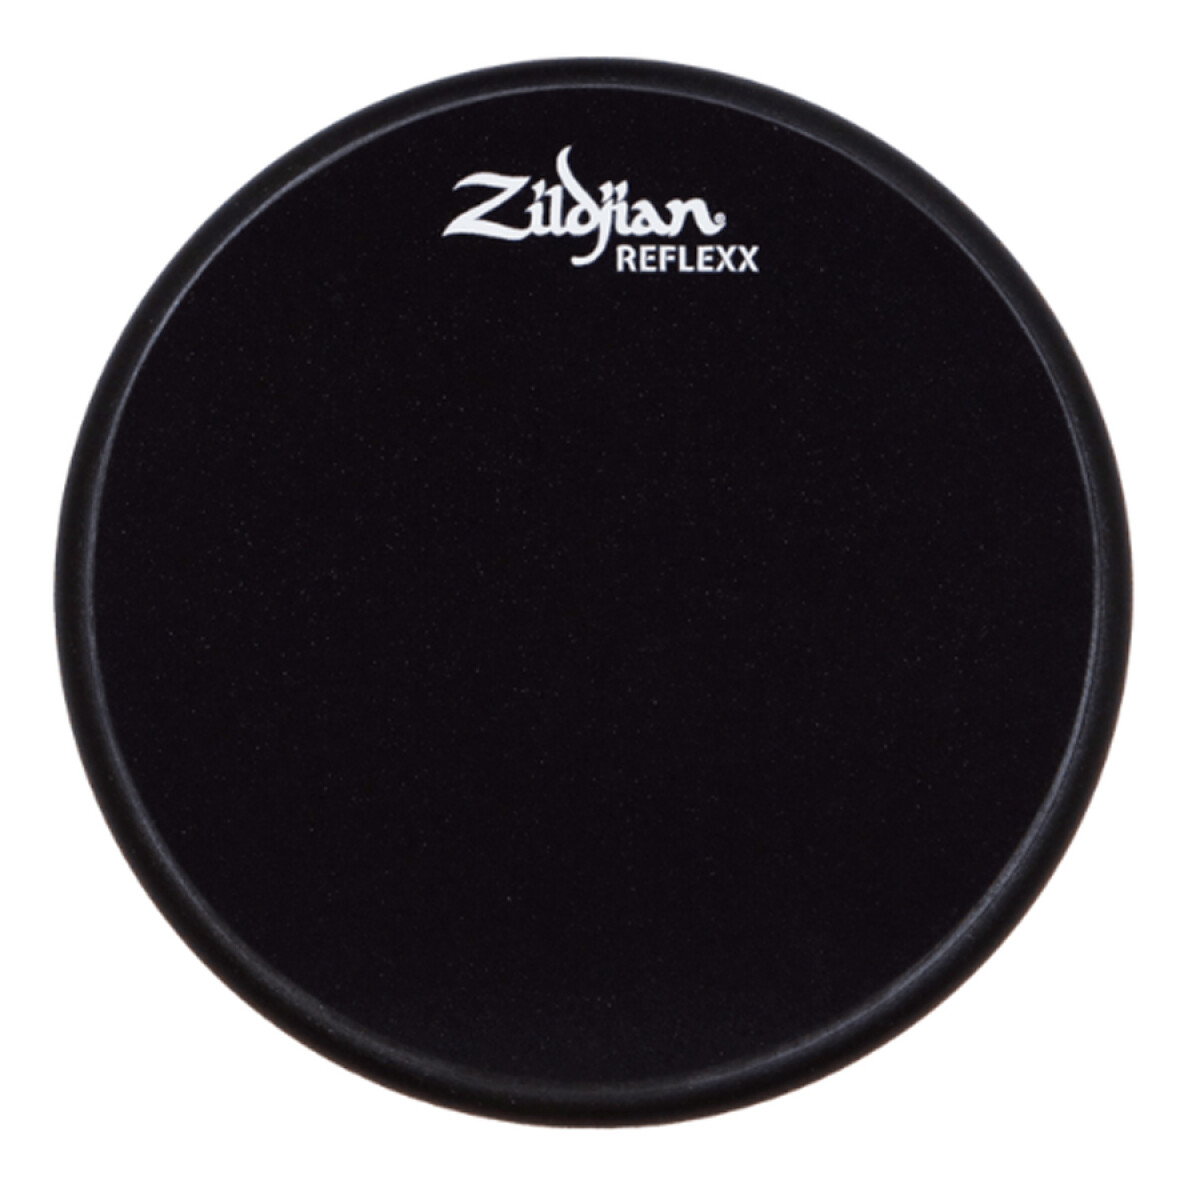 Zildjian Reflexx Conditioning pad de práctica 10" 